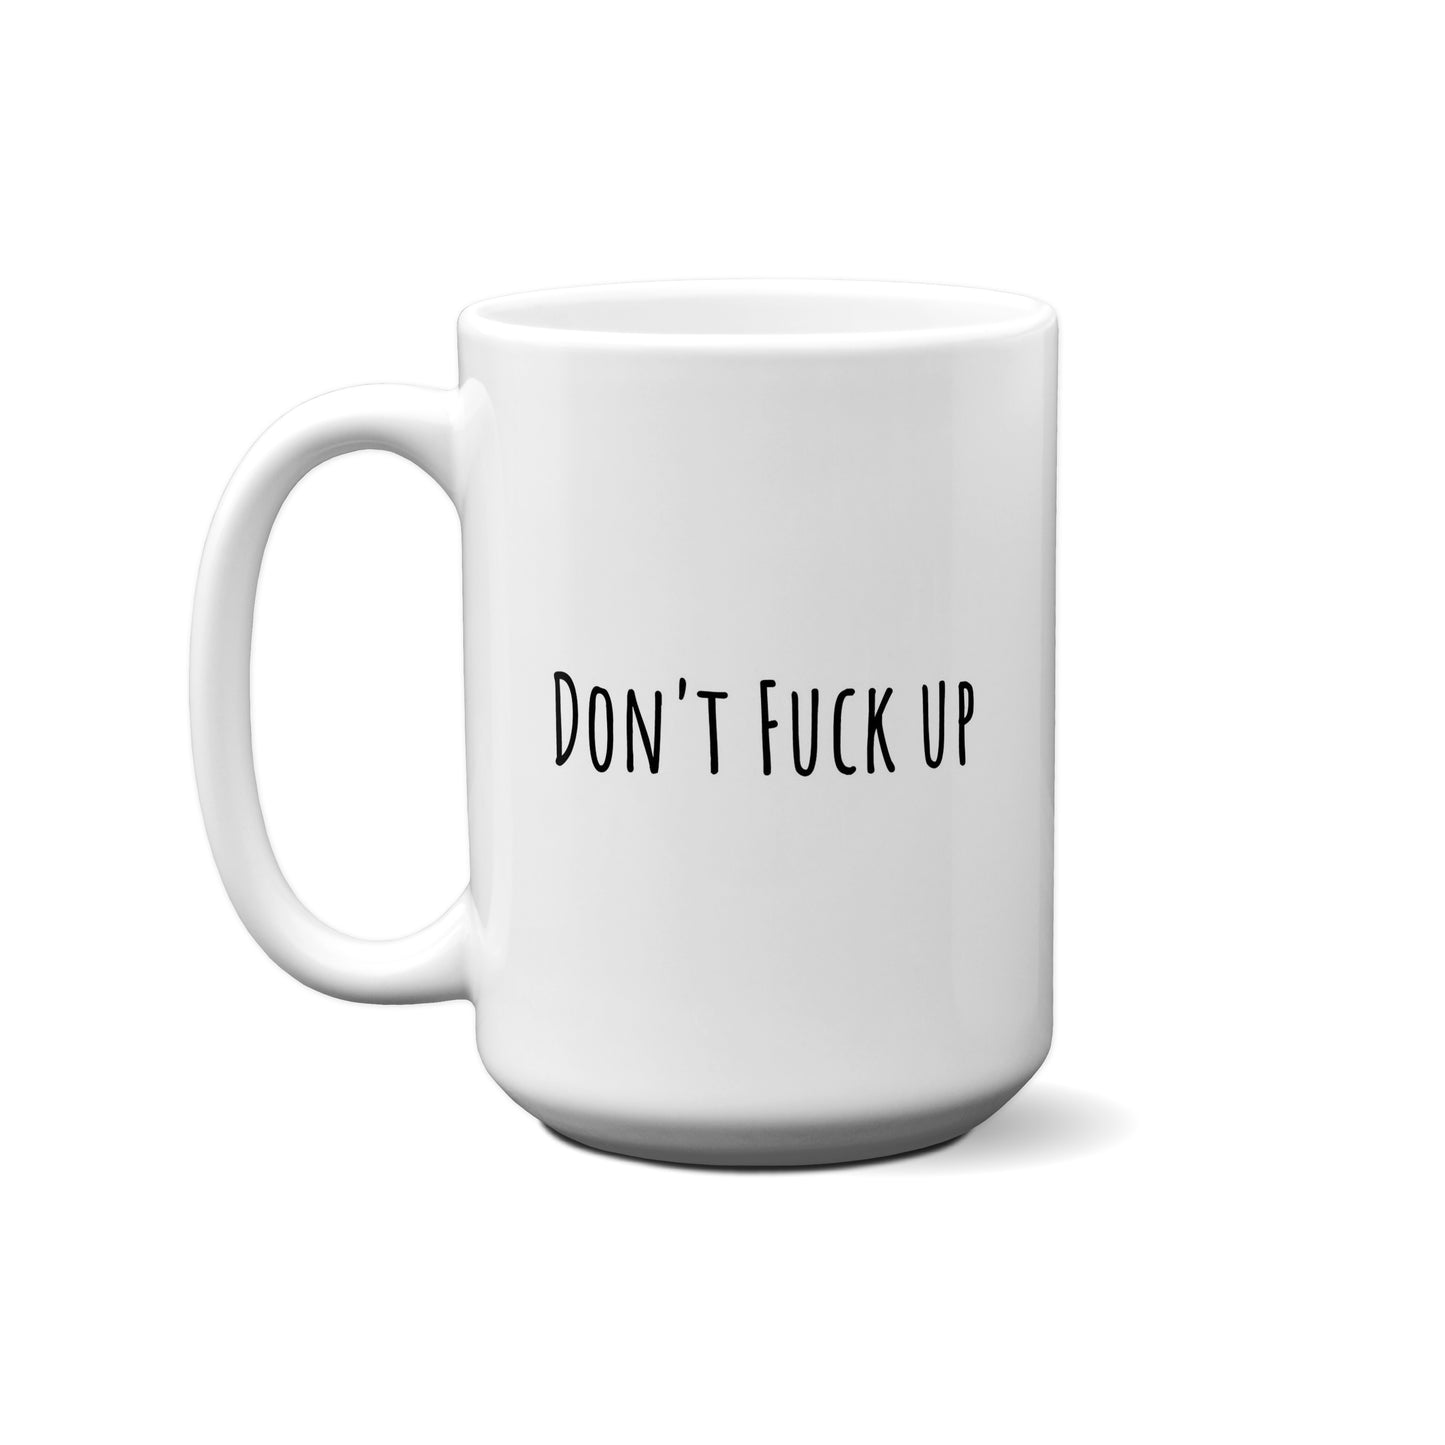 Don't Fuck Up Quote Mug